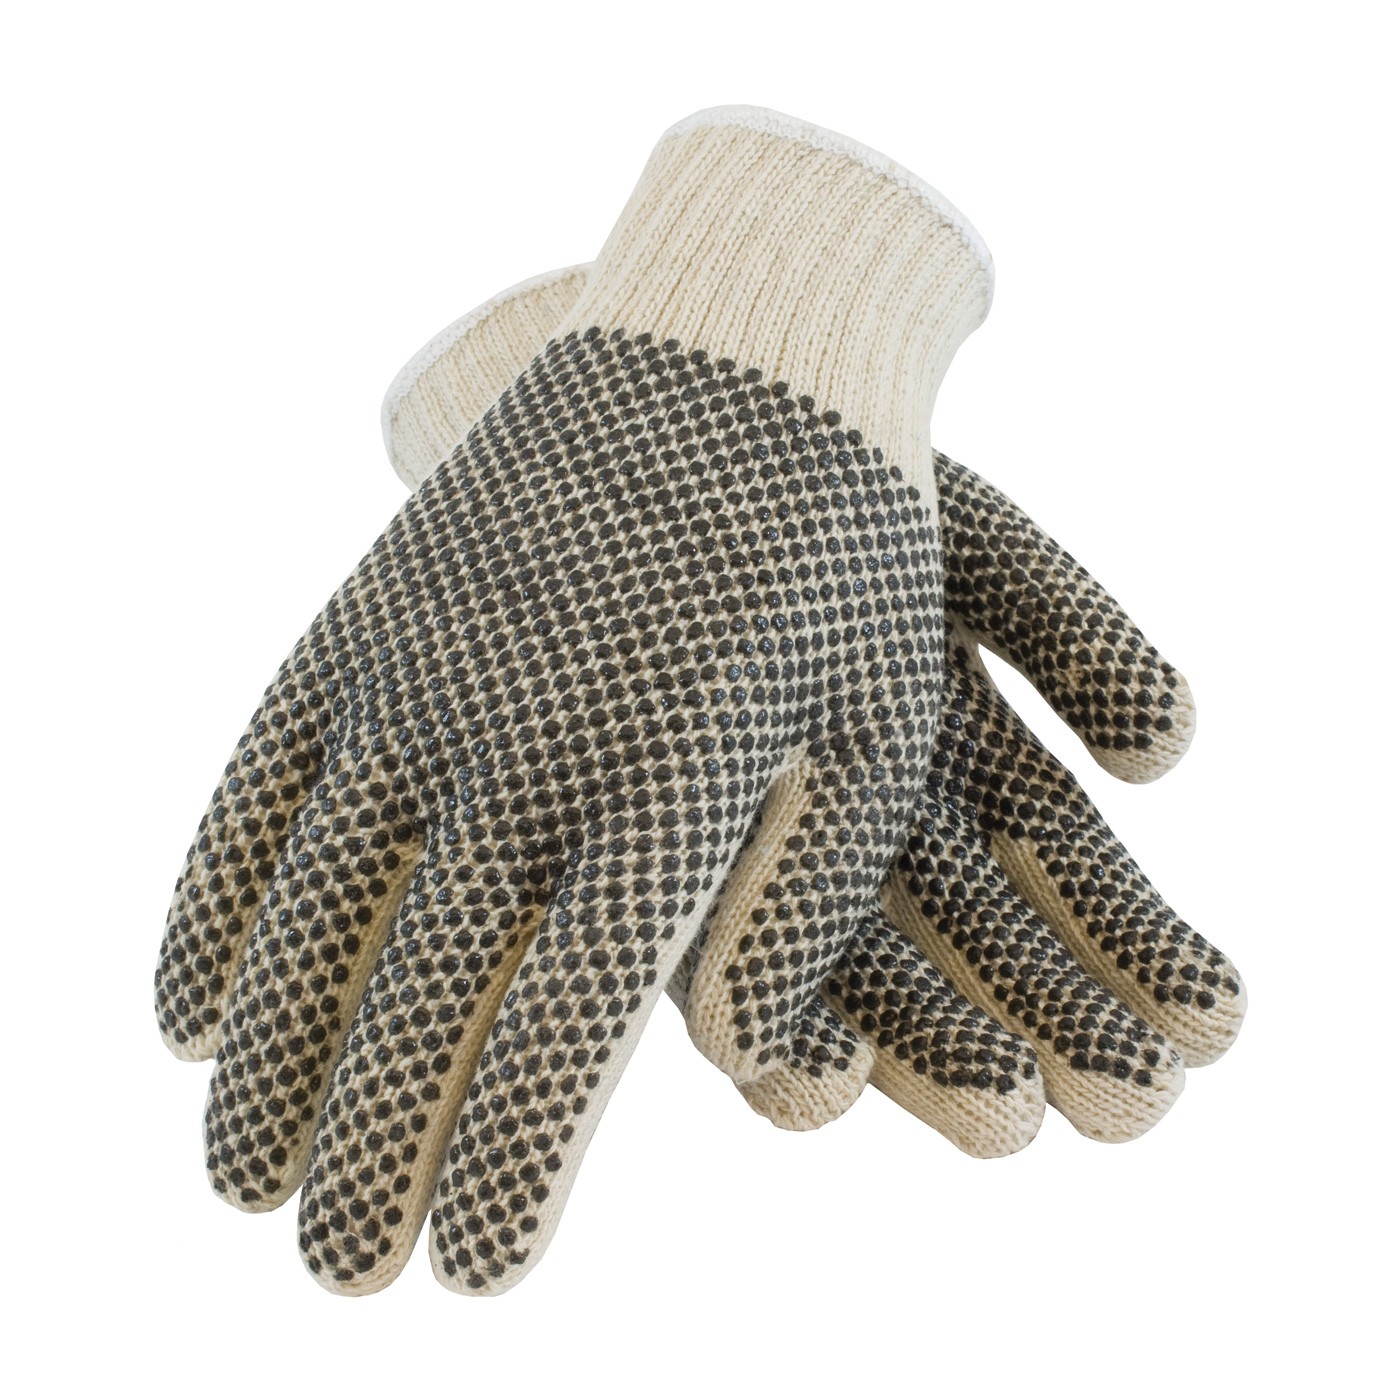 Glove Seamless Knit PVC Coated Double Sided Dense LRG 12PR/BG 20/CS